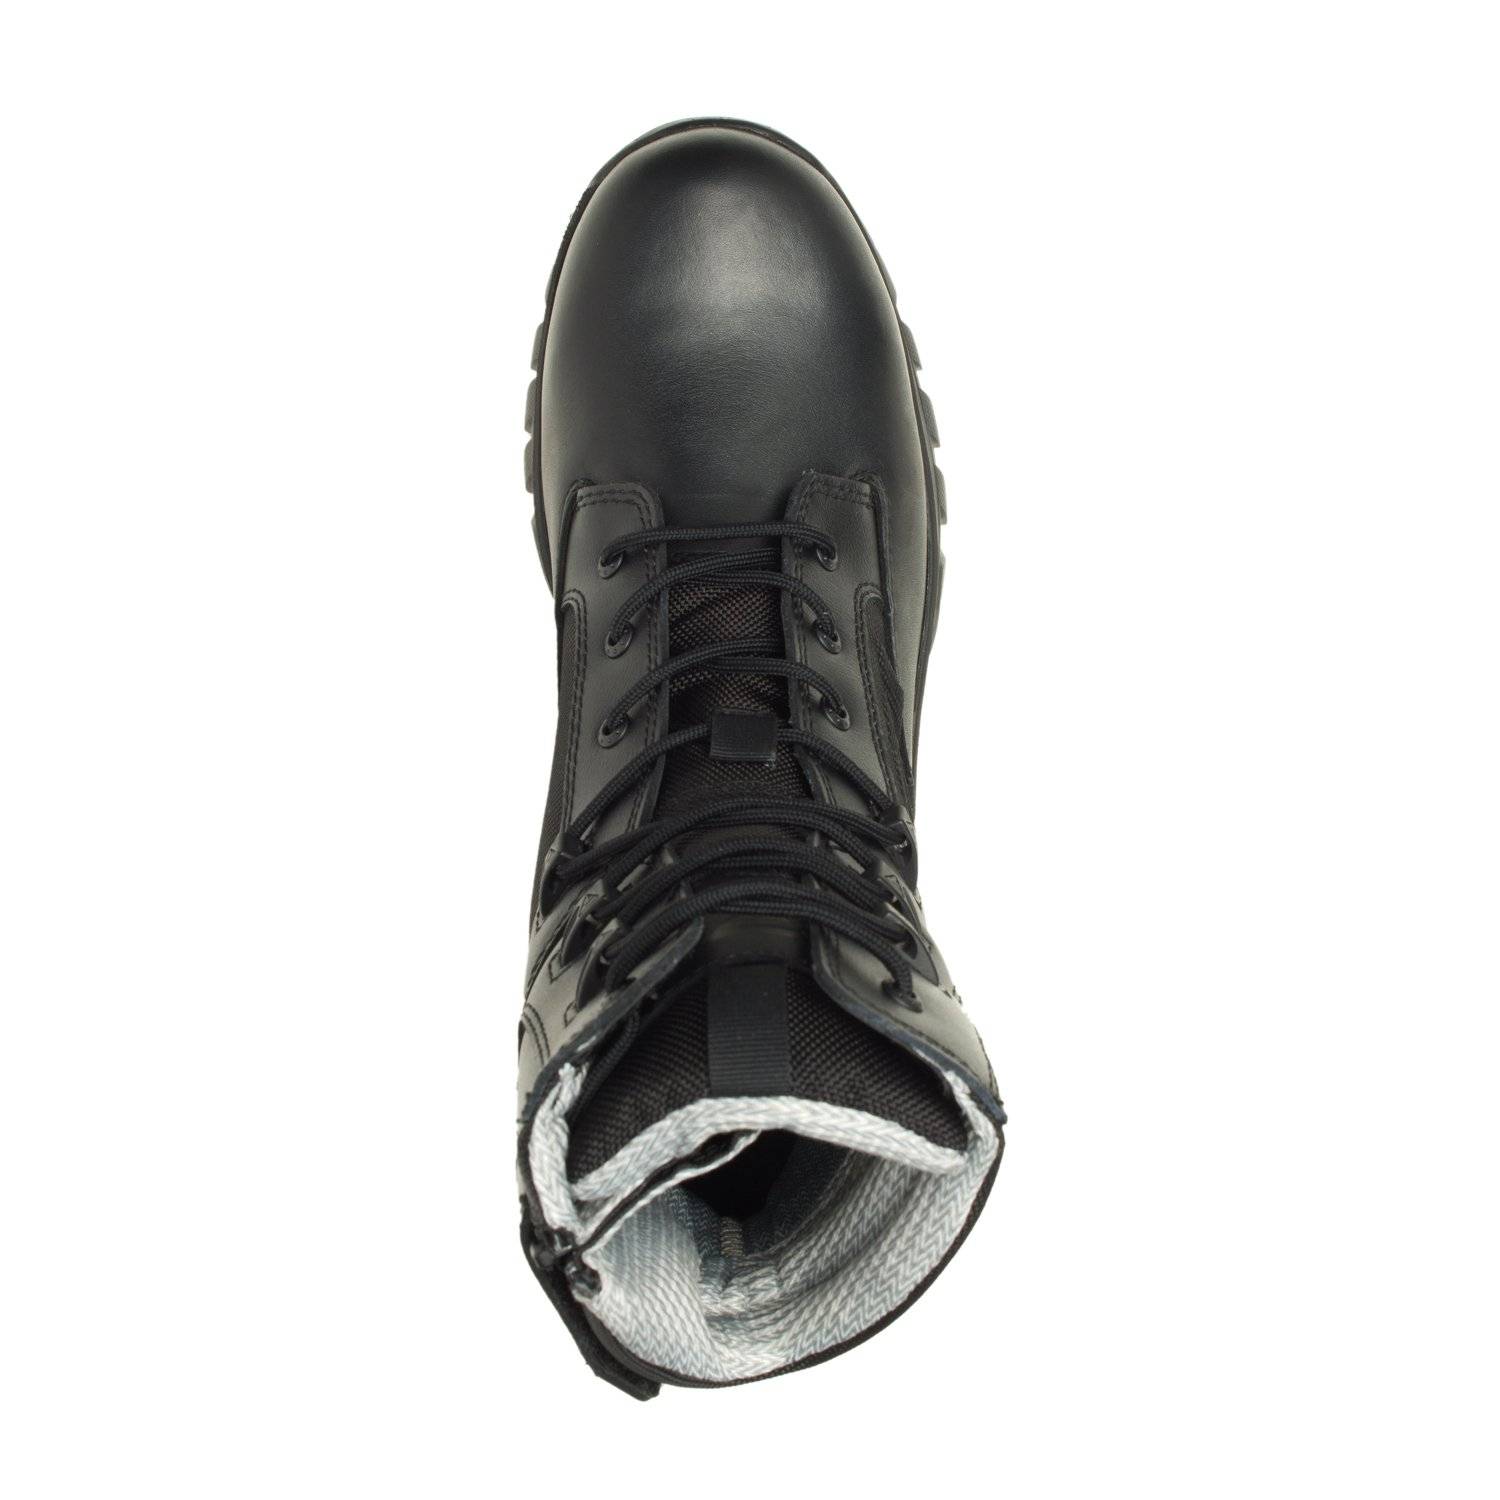 GX X2 Men's Tall Side-Zip DRYGUARD+ Waterproof Boots | Bates